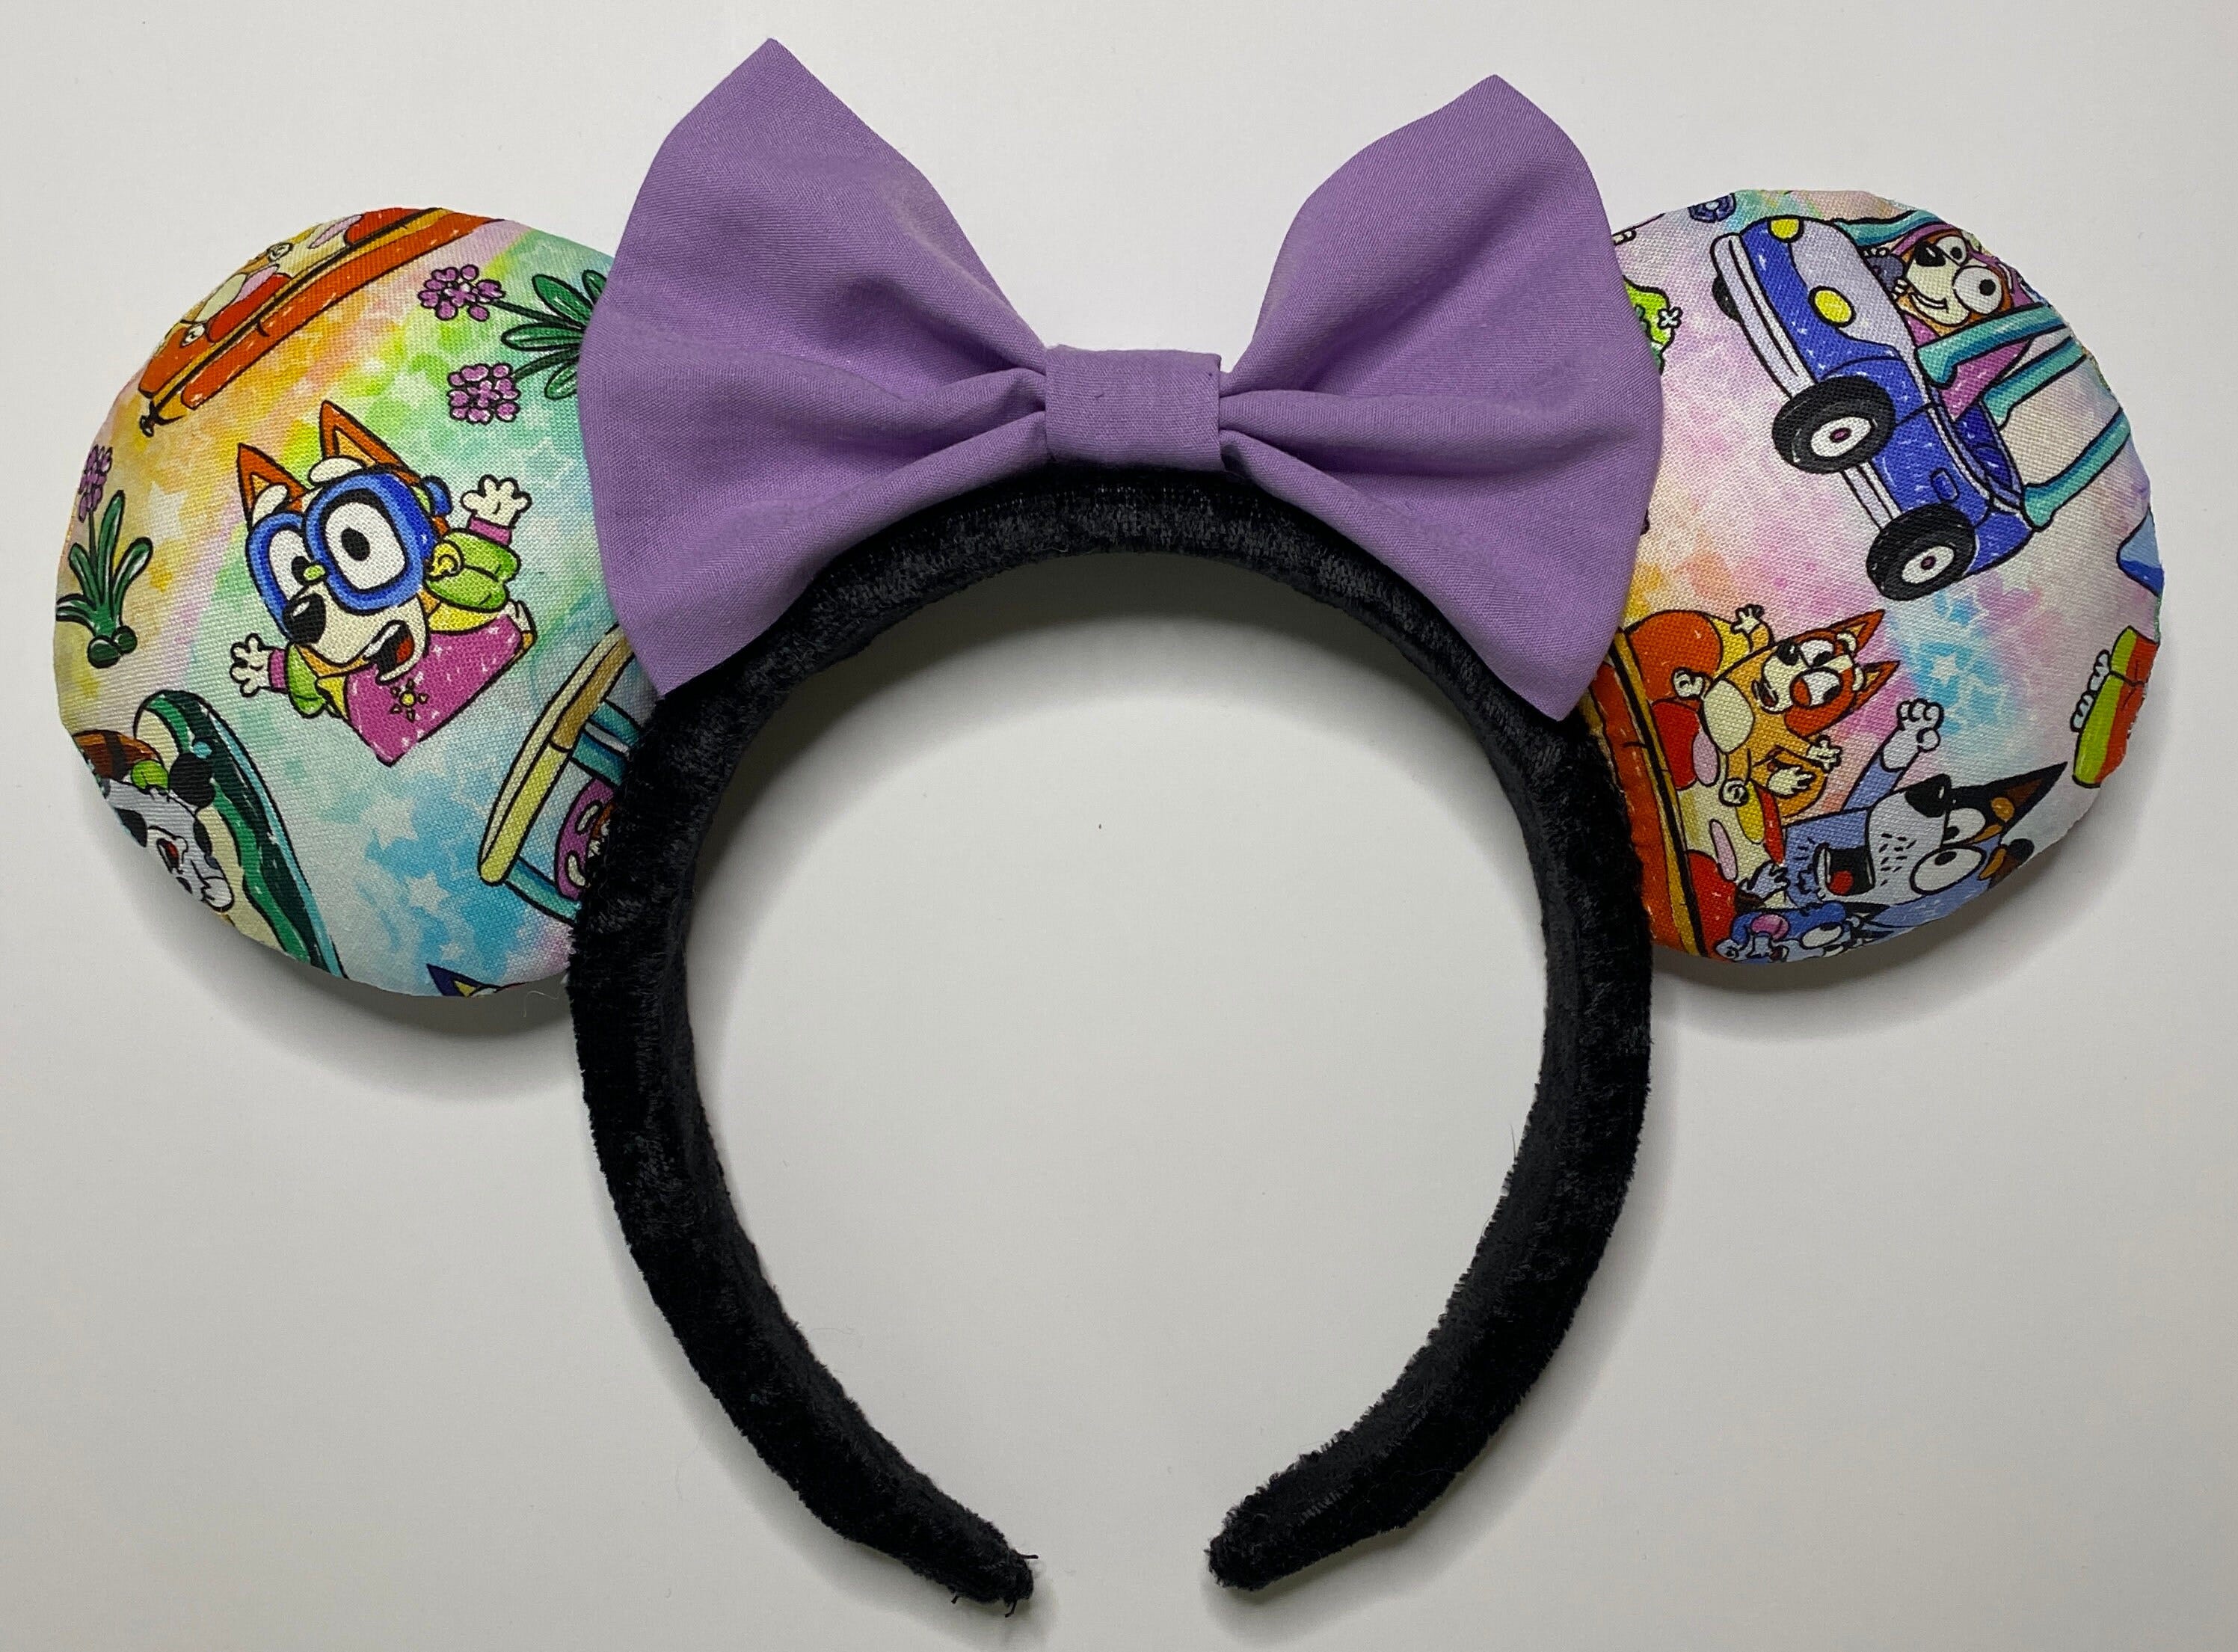 Colorful Bluey Cartoon Mouse Ears Headband with Bow Options